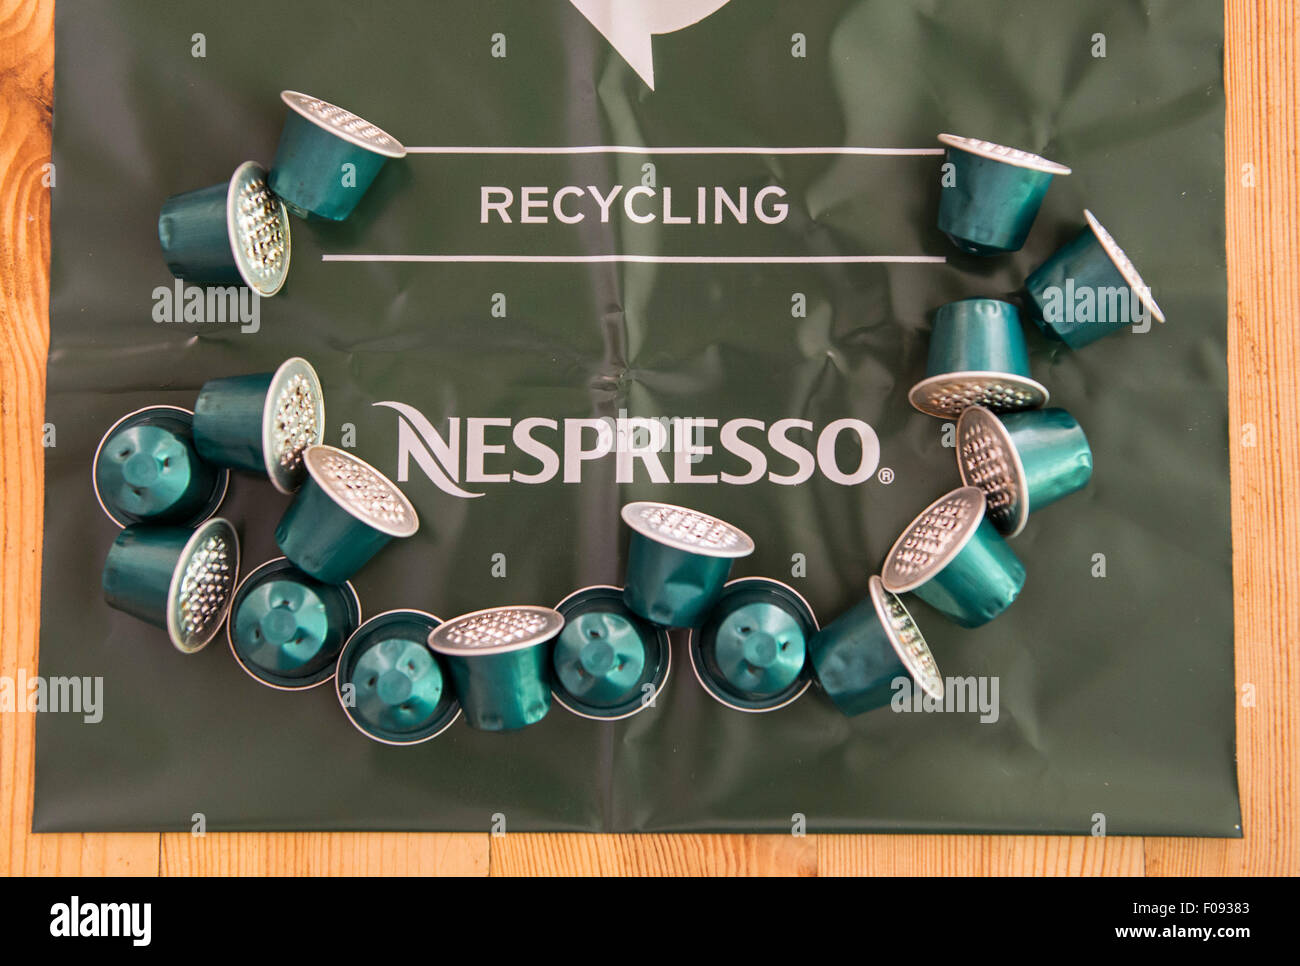 Nespresso coffee capsules on a Nespresso recycling bag Stock Photo - Alamy